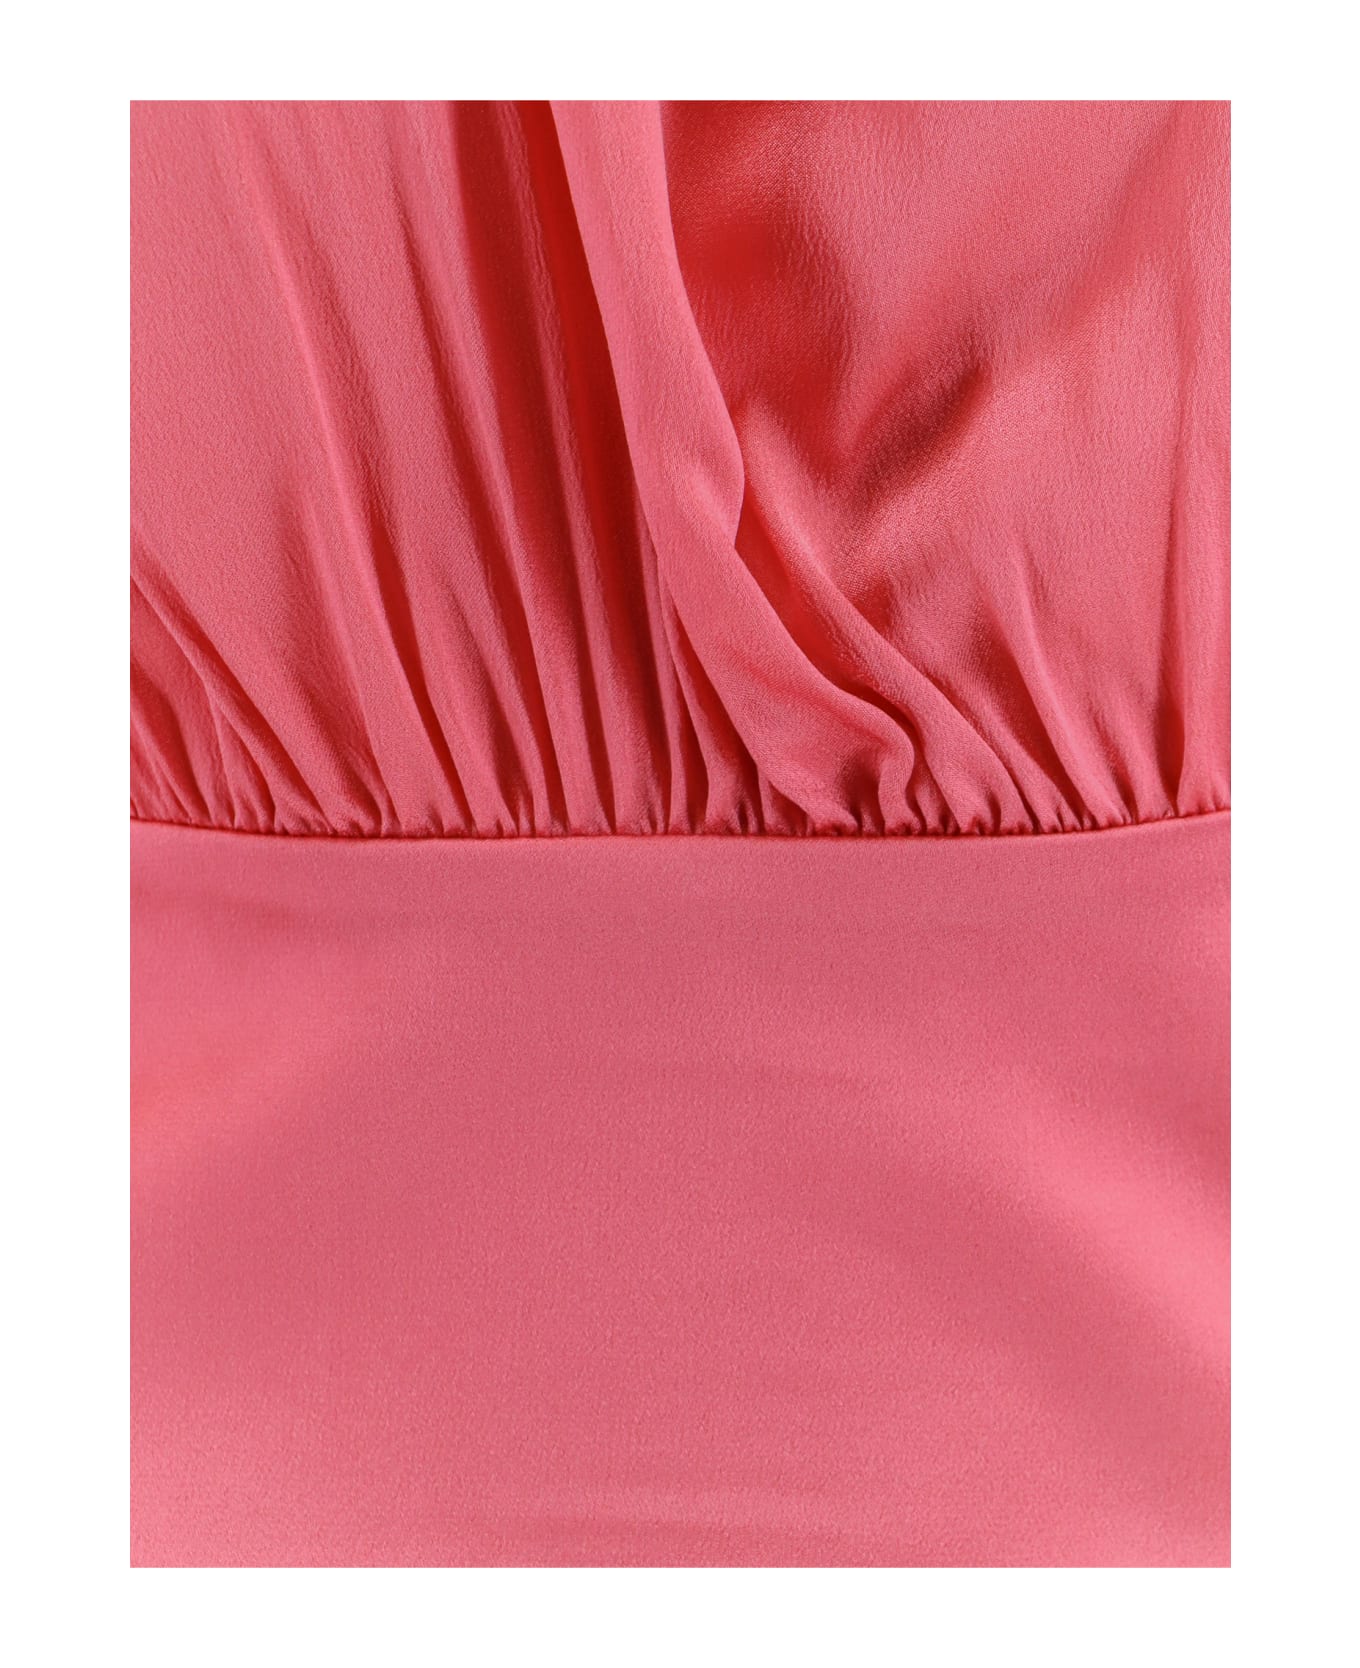 SEMICOUTURE Dress - Pink ワンピース＆ドレス